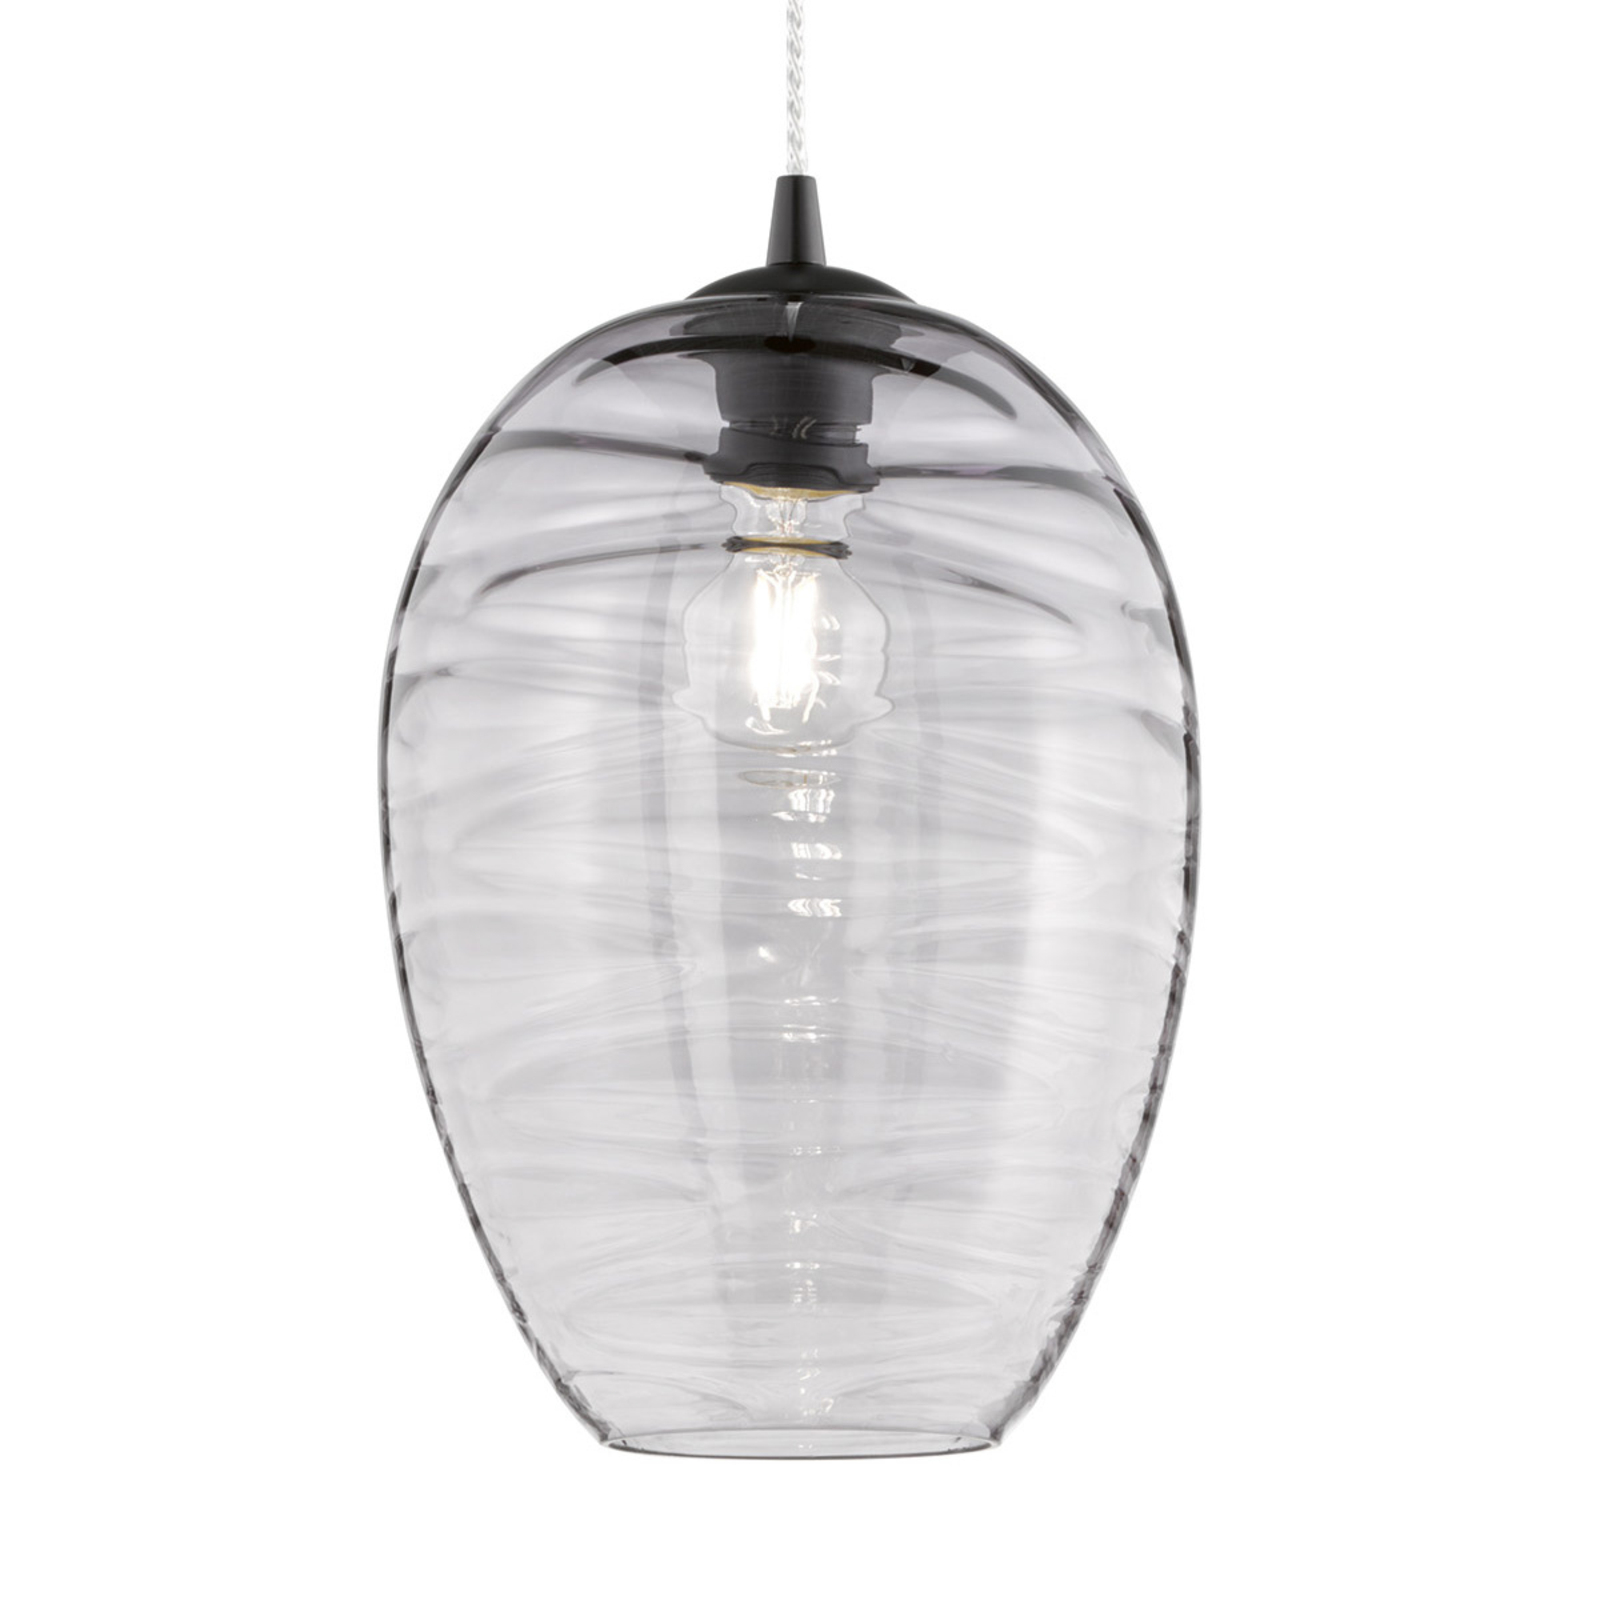 Lampa wisząca Gordes ze szkła, kształt czopa